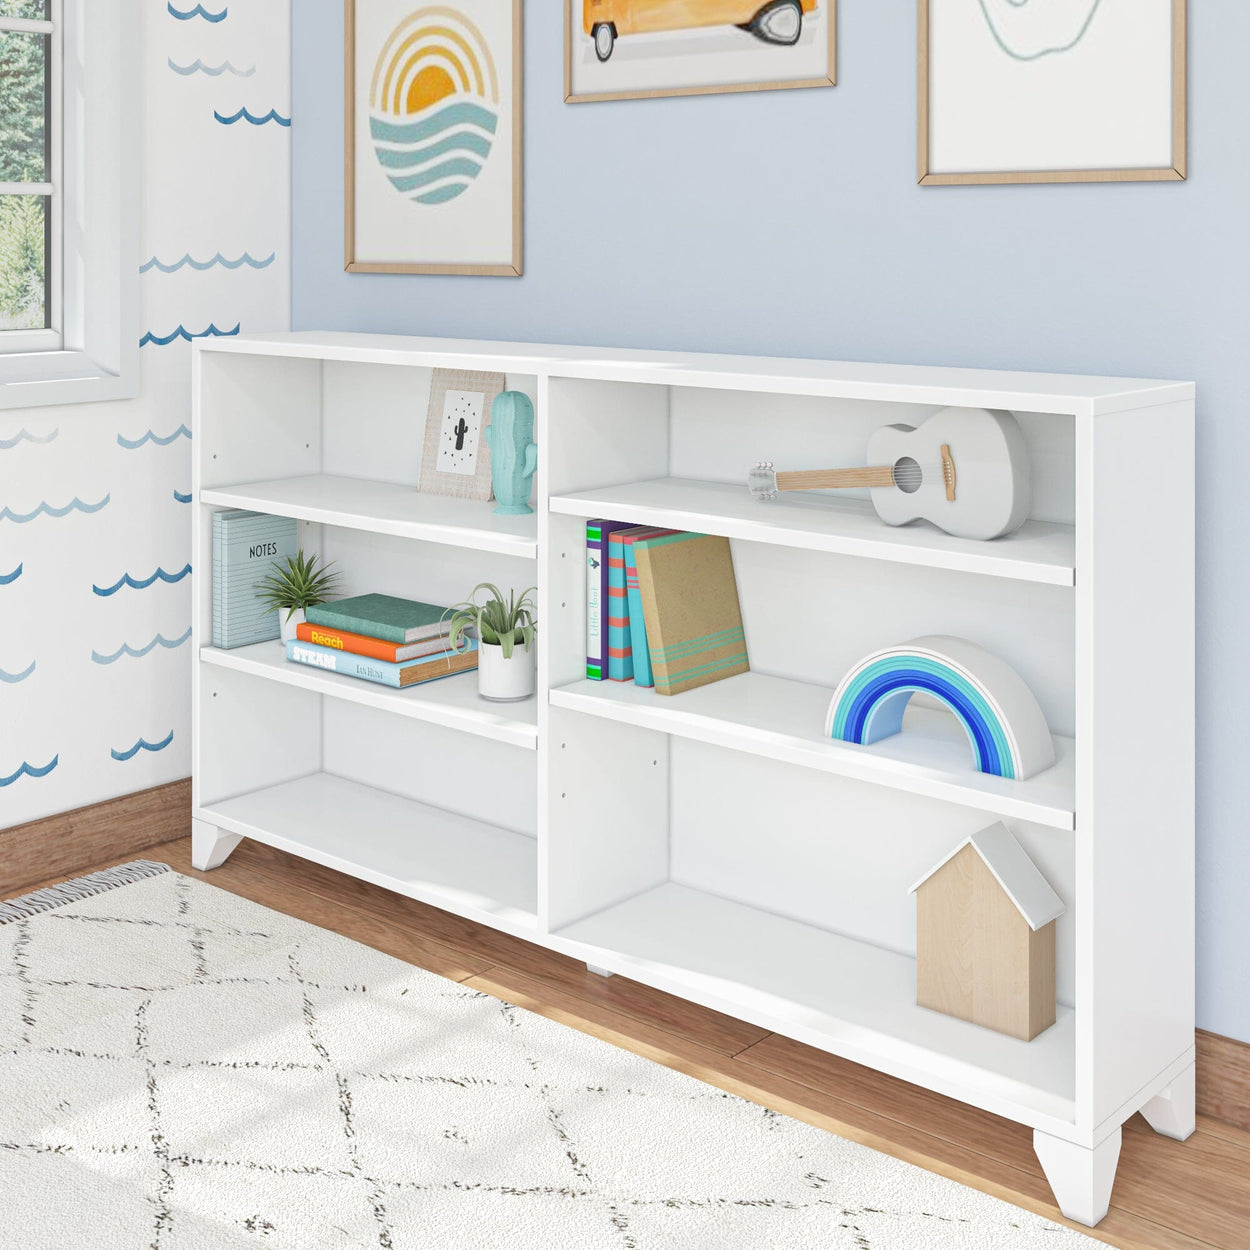 184760-002 : Furniture Classic 6-Shelf Bookcase, White